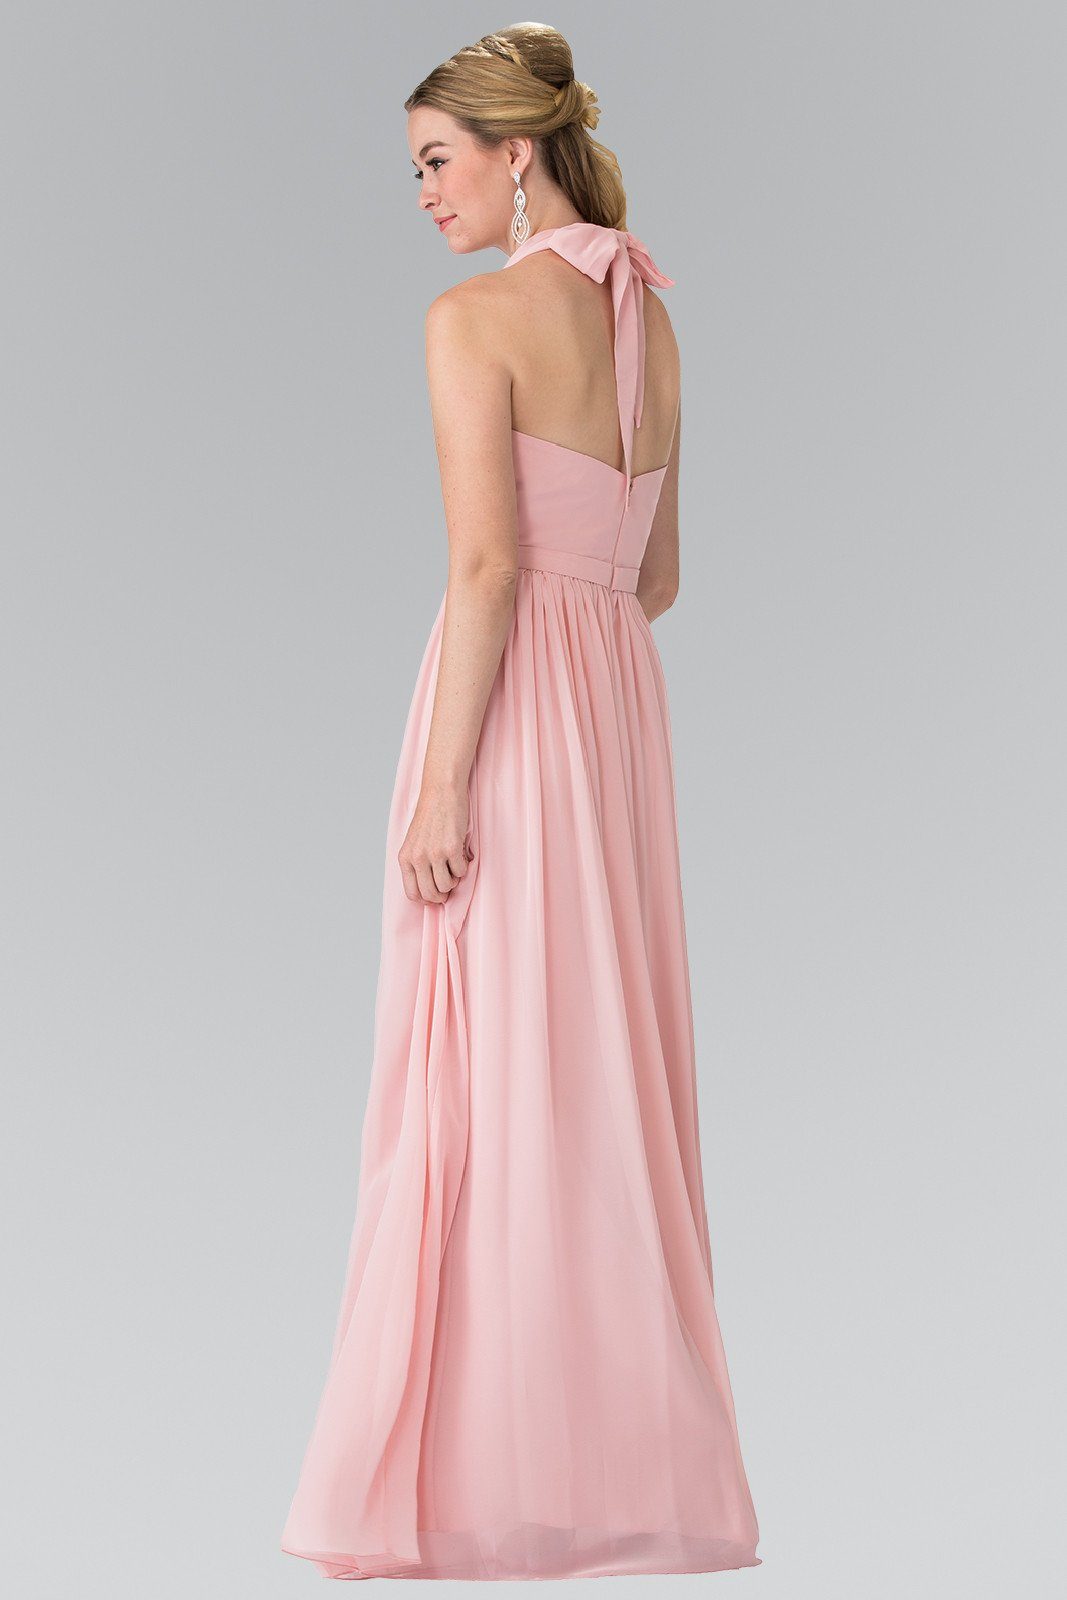 Long V-Neck Chiffon Halter Dress by Elizabeth K GL2362-Long Formal Dresses-ABC Fashion